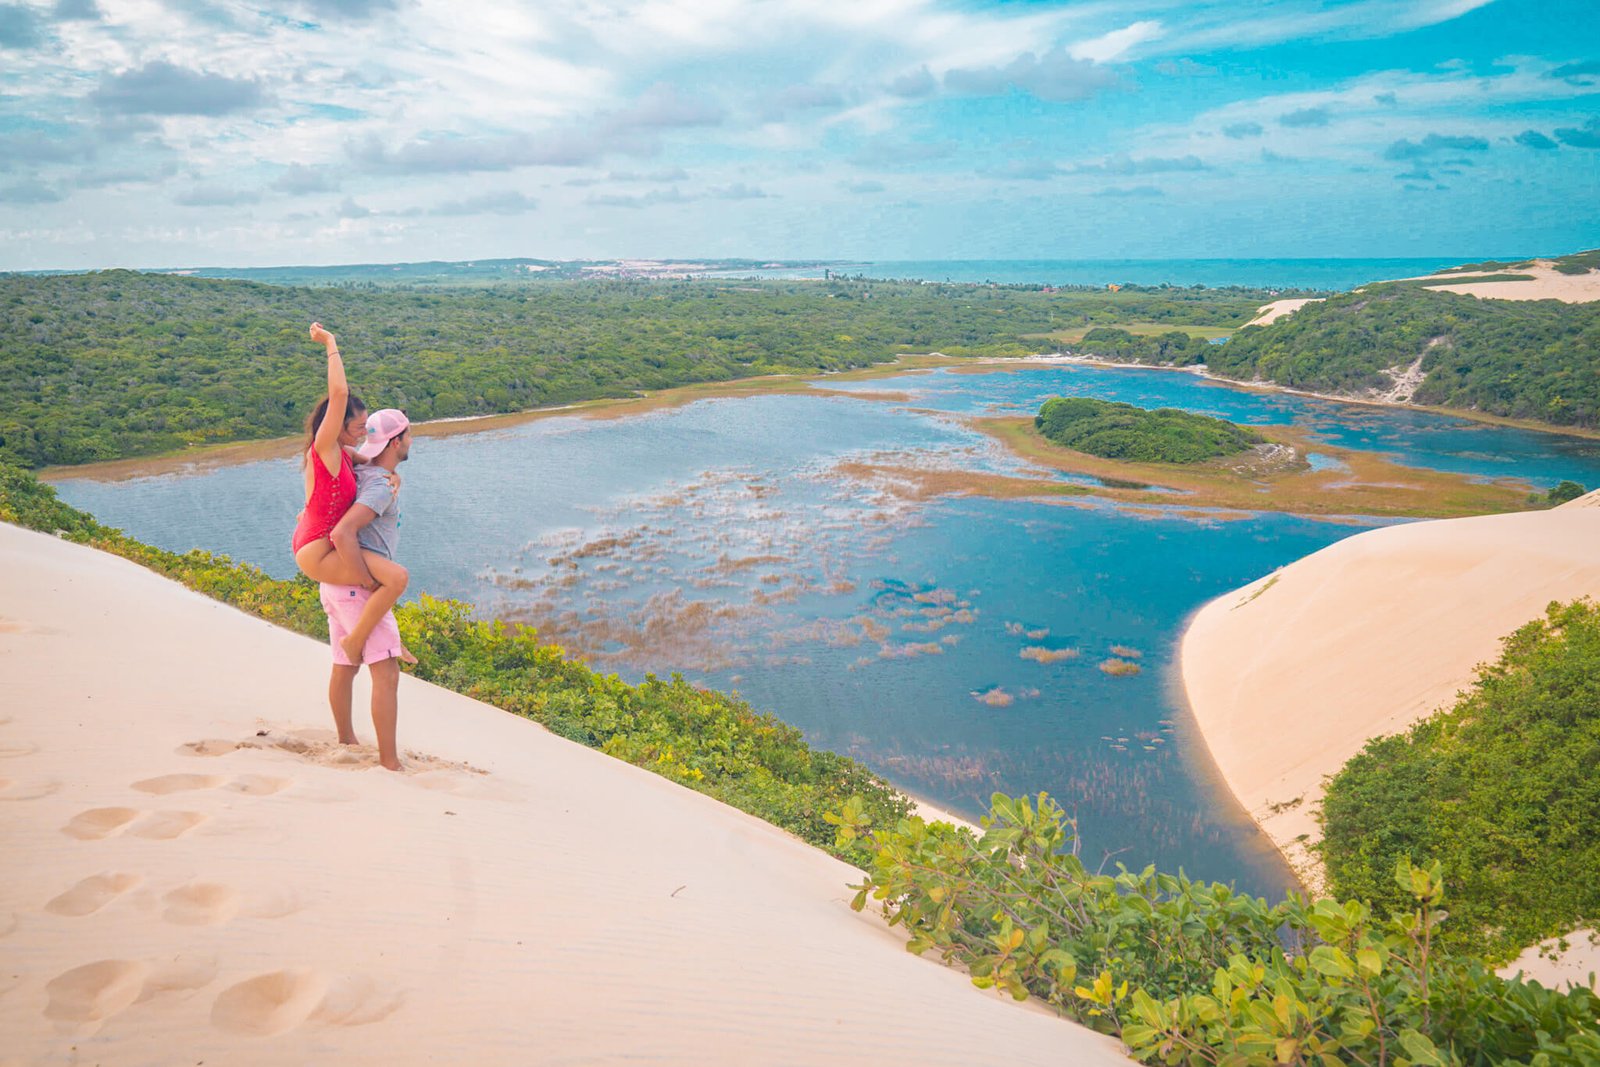 Jenipabu lagoon, things to do in Natal, Brazil